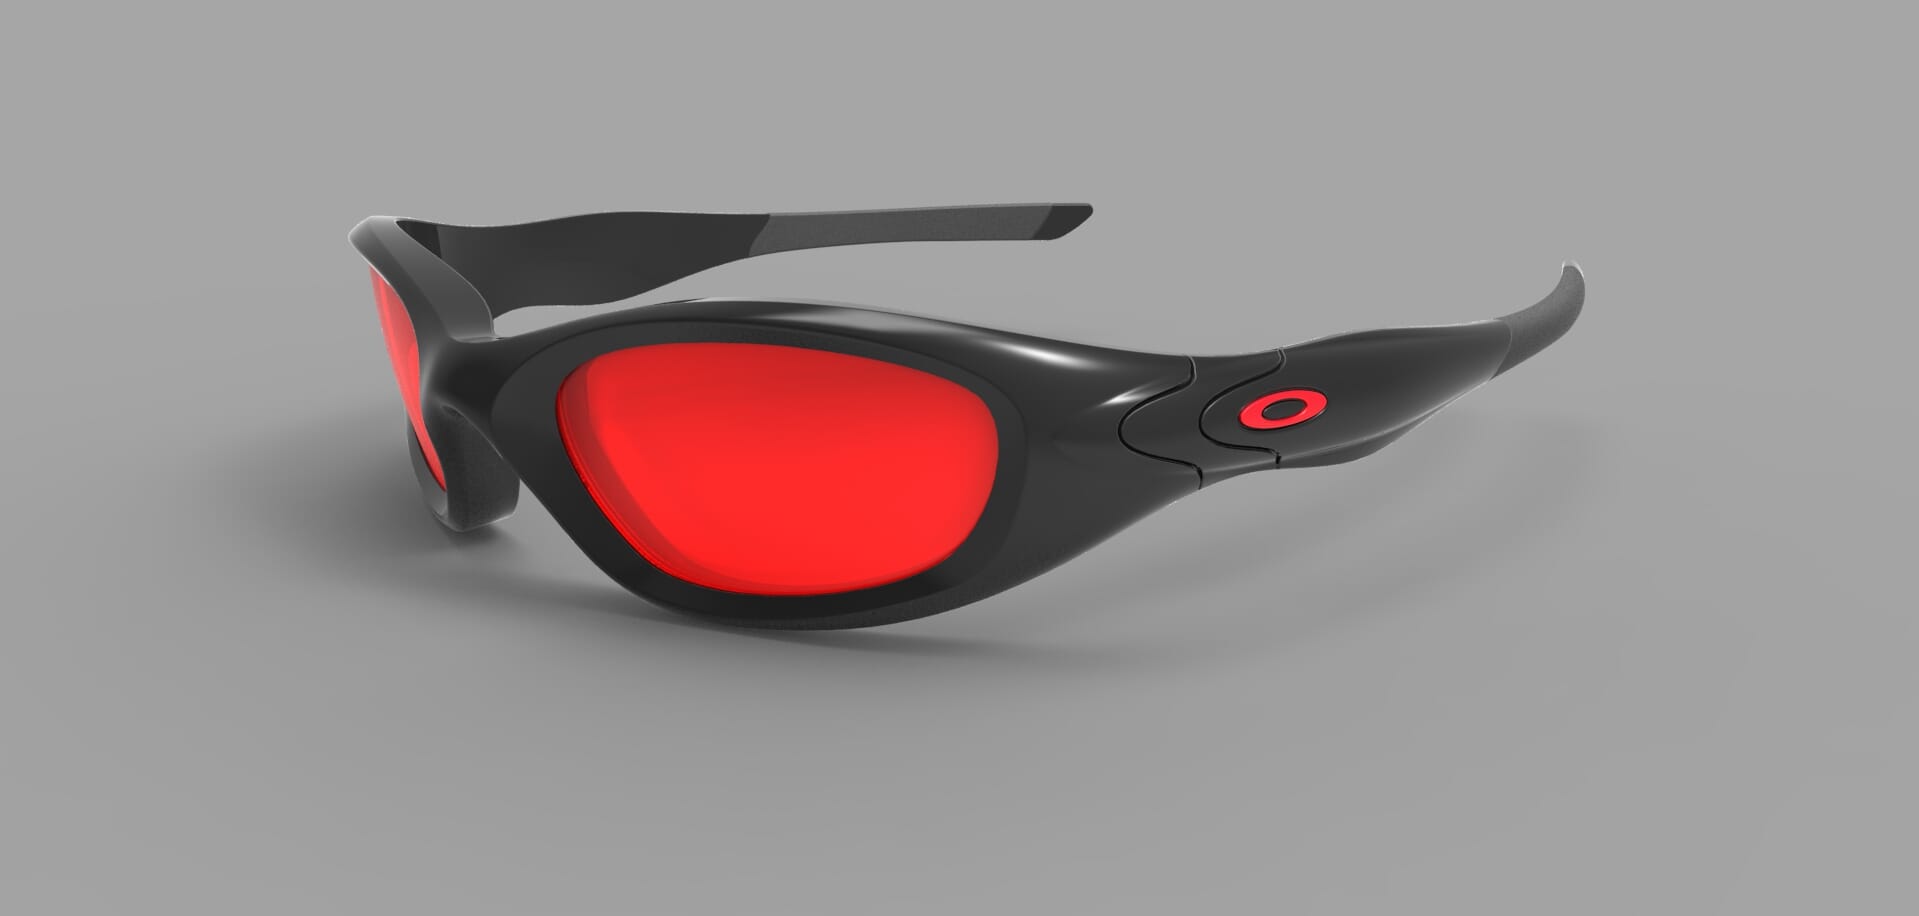 oakley sunglasses 3d model